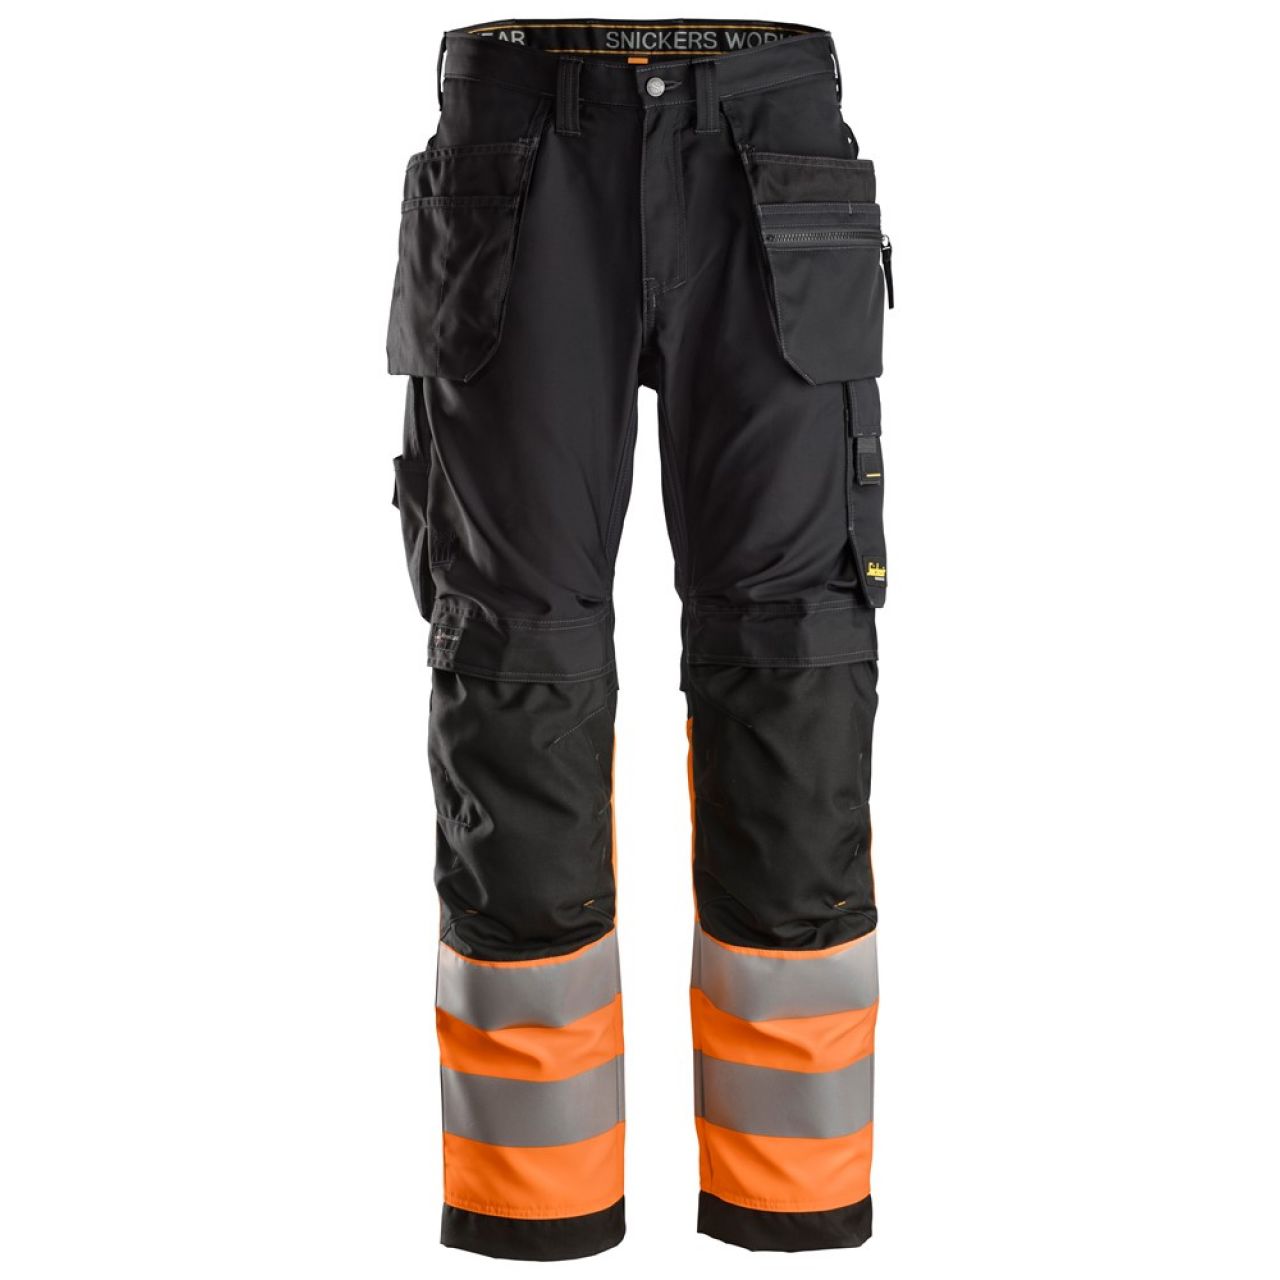 6233 Pantalones largos de trabajo de alta visibilidad clase 1 con bolsillos flotantes AllroundWork negro-naranja talla 60